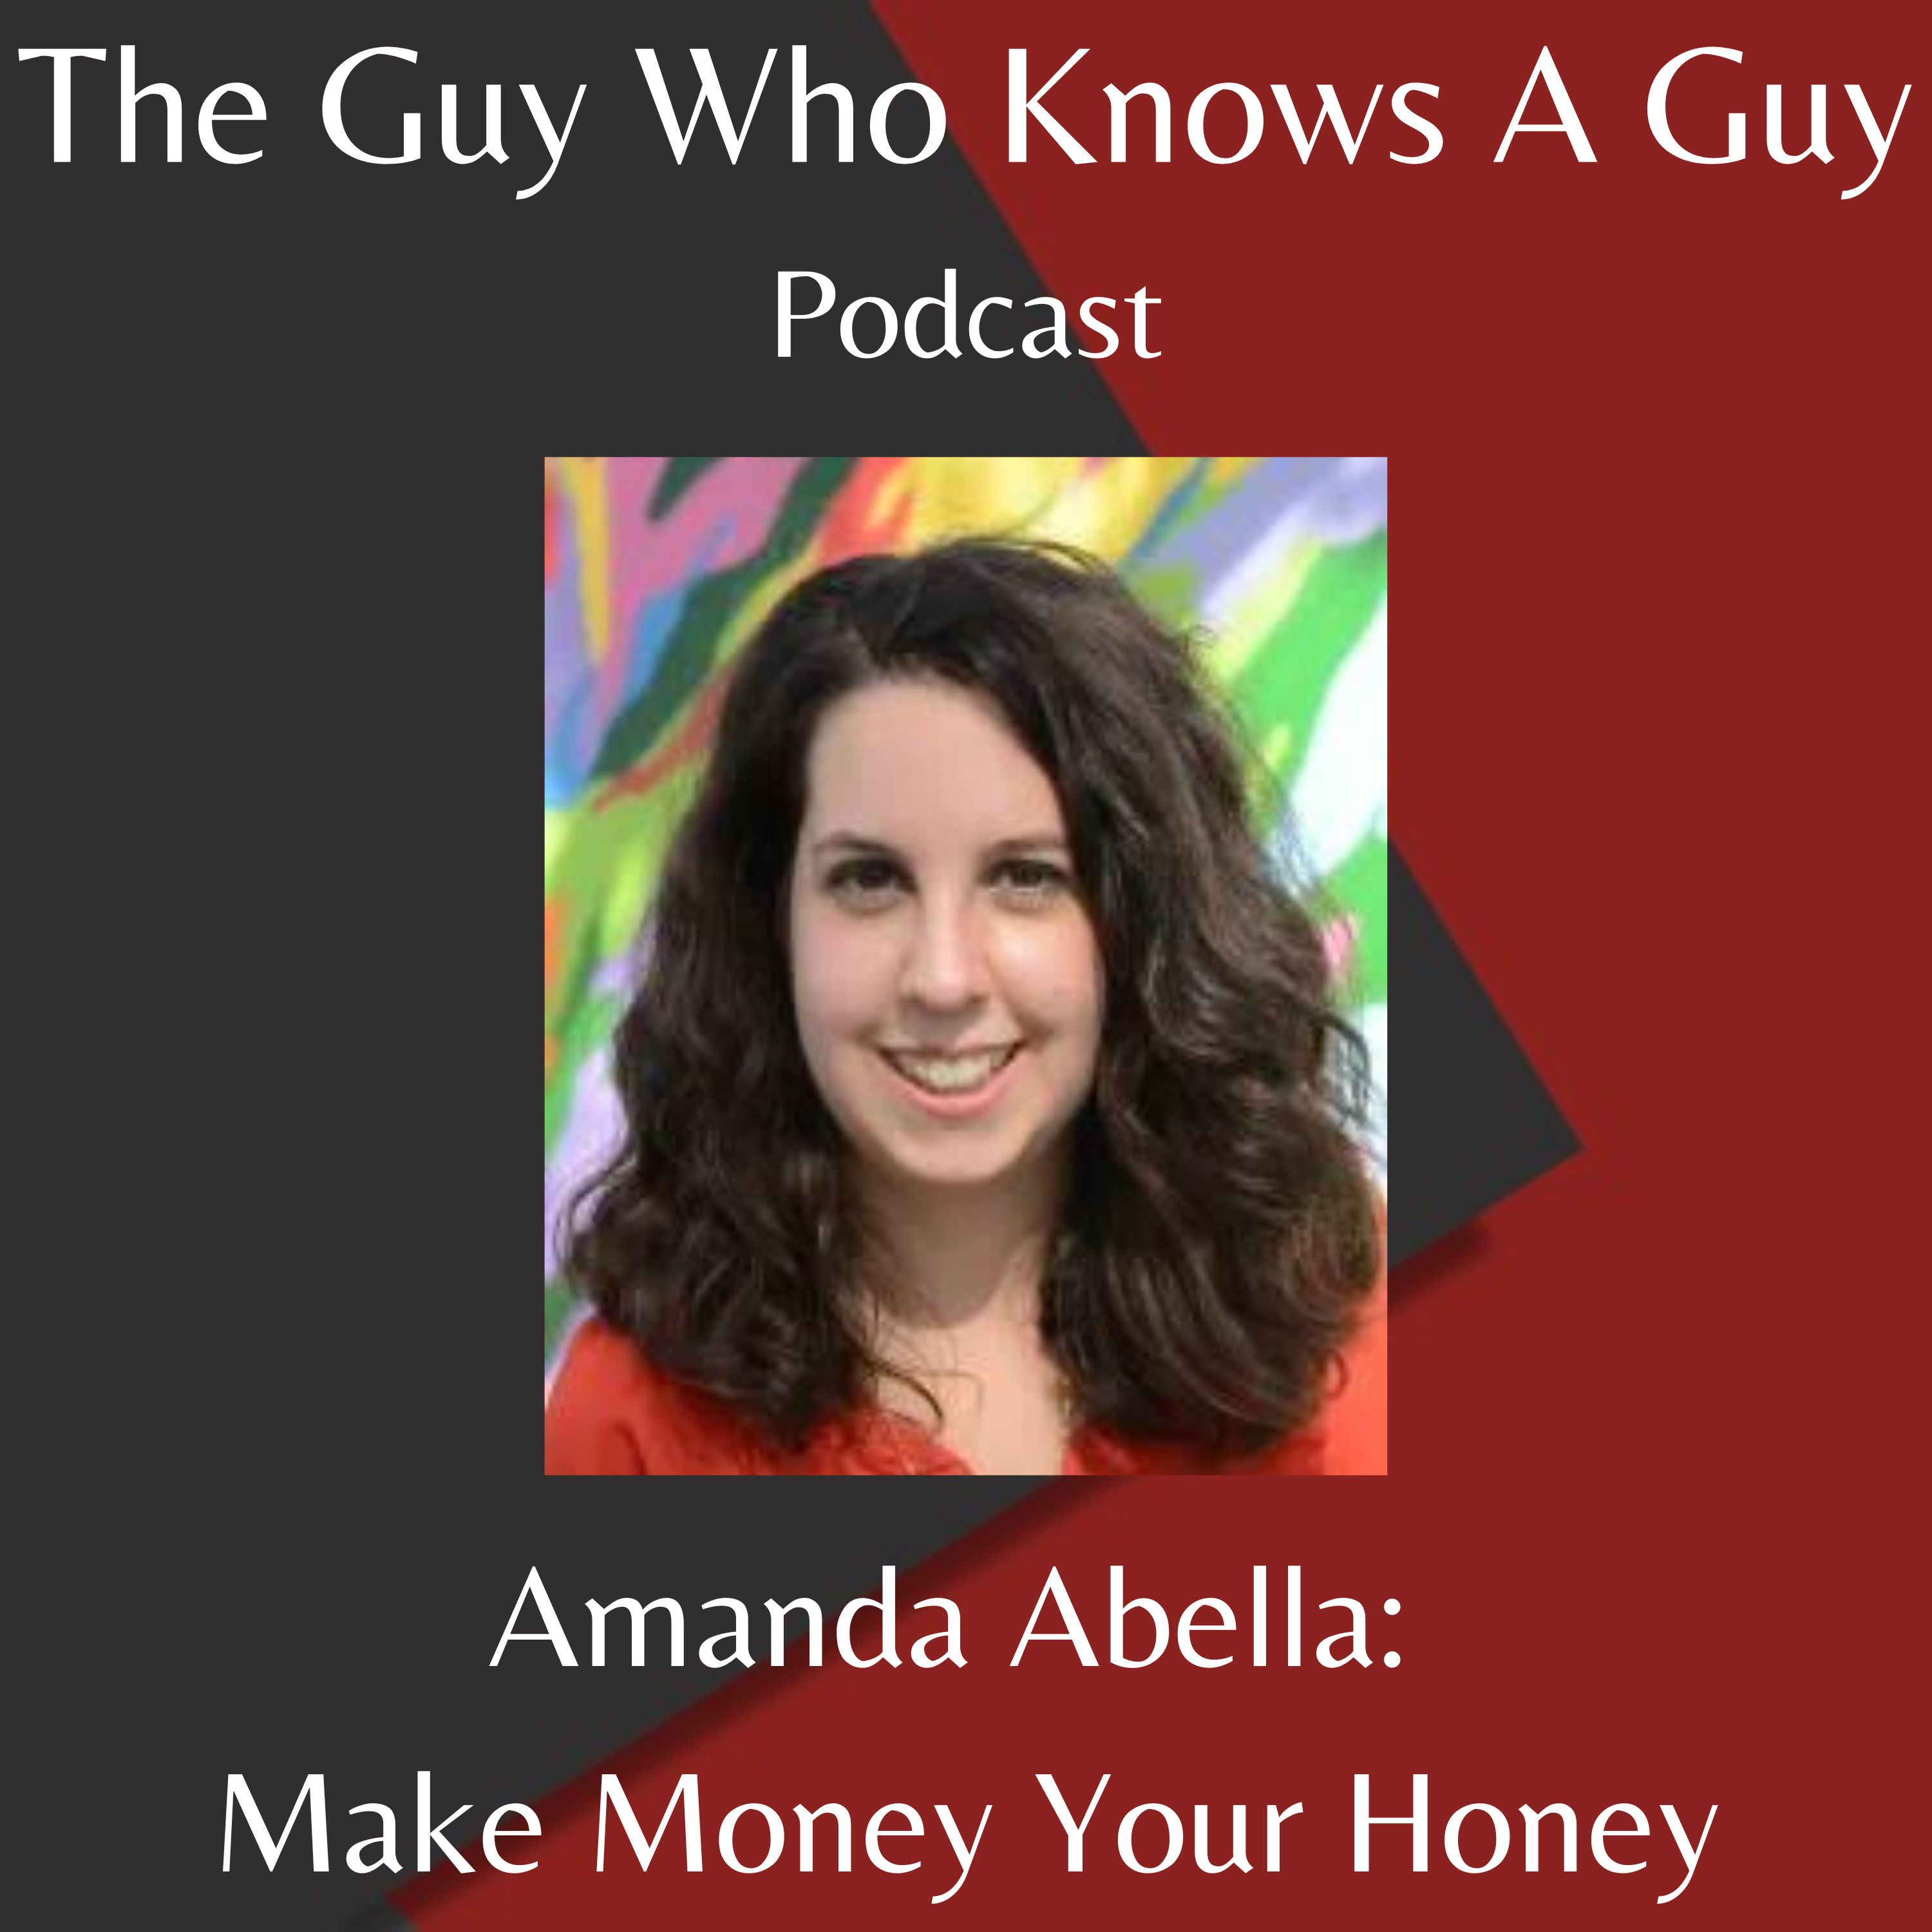 Amanda Abella: Make Money Your Honey